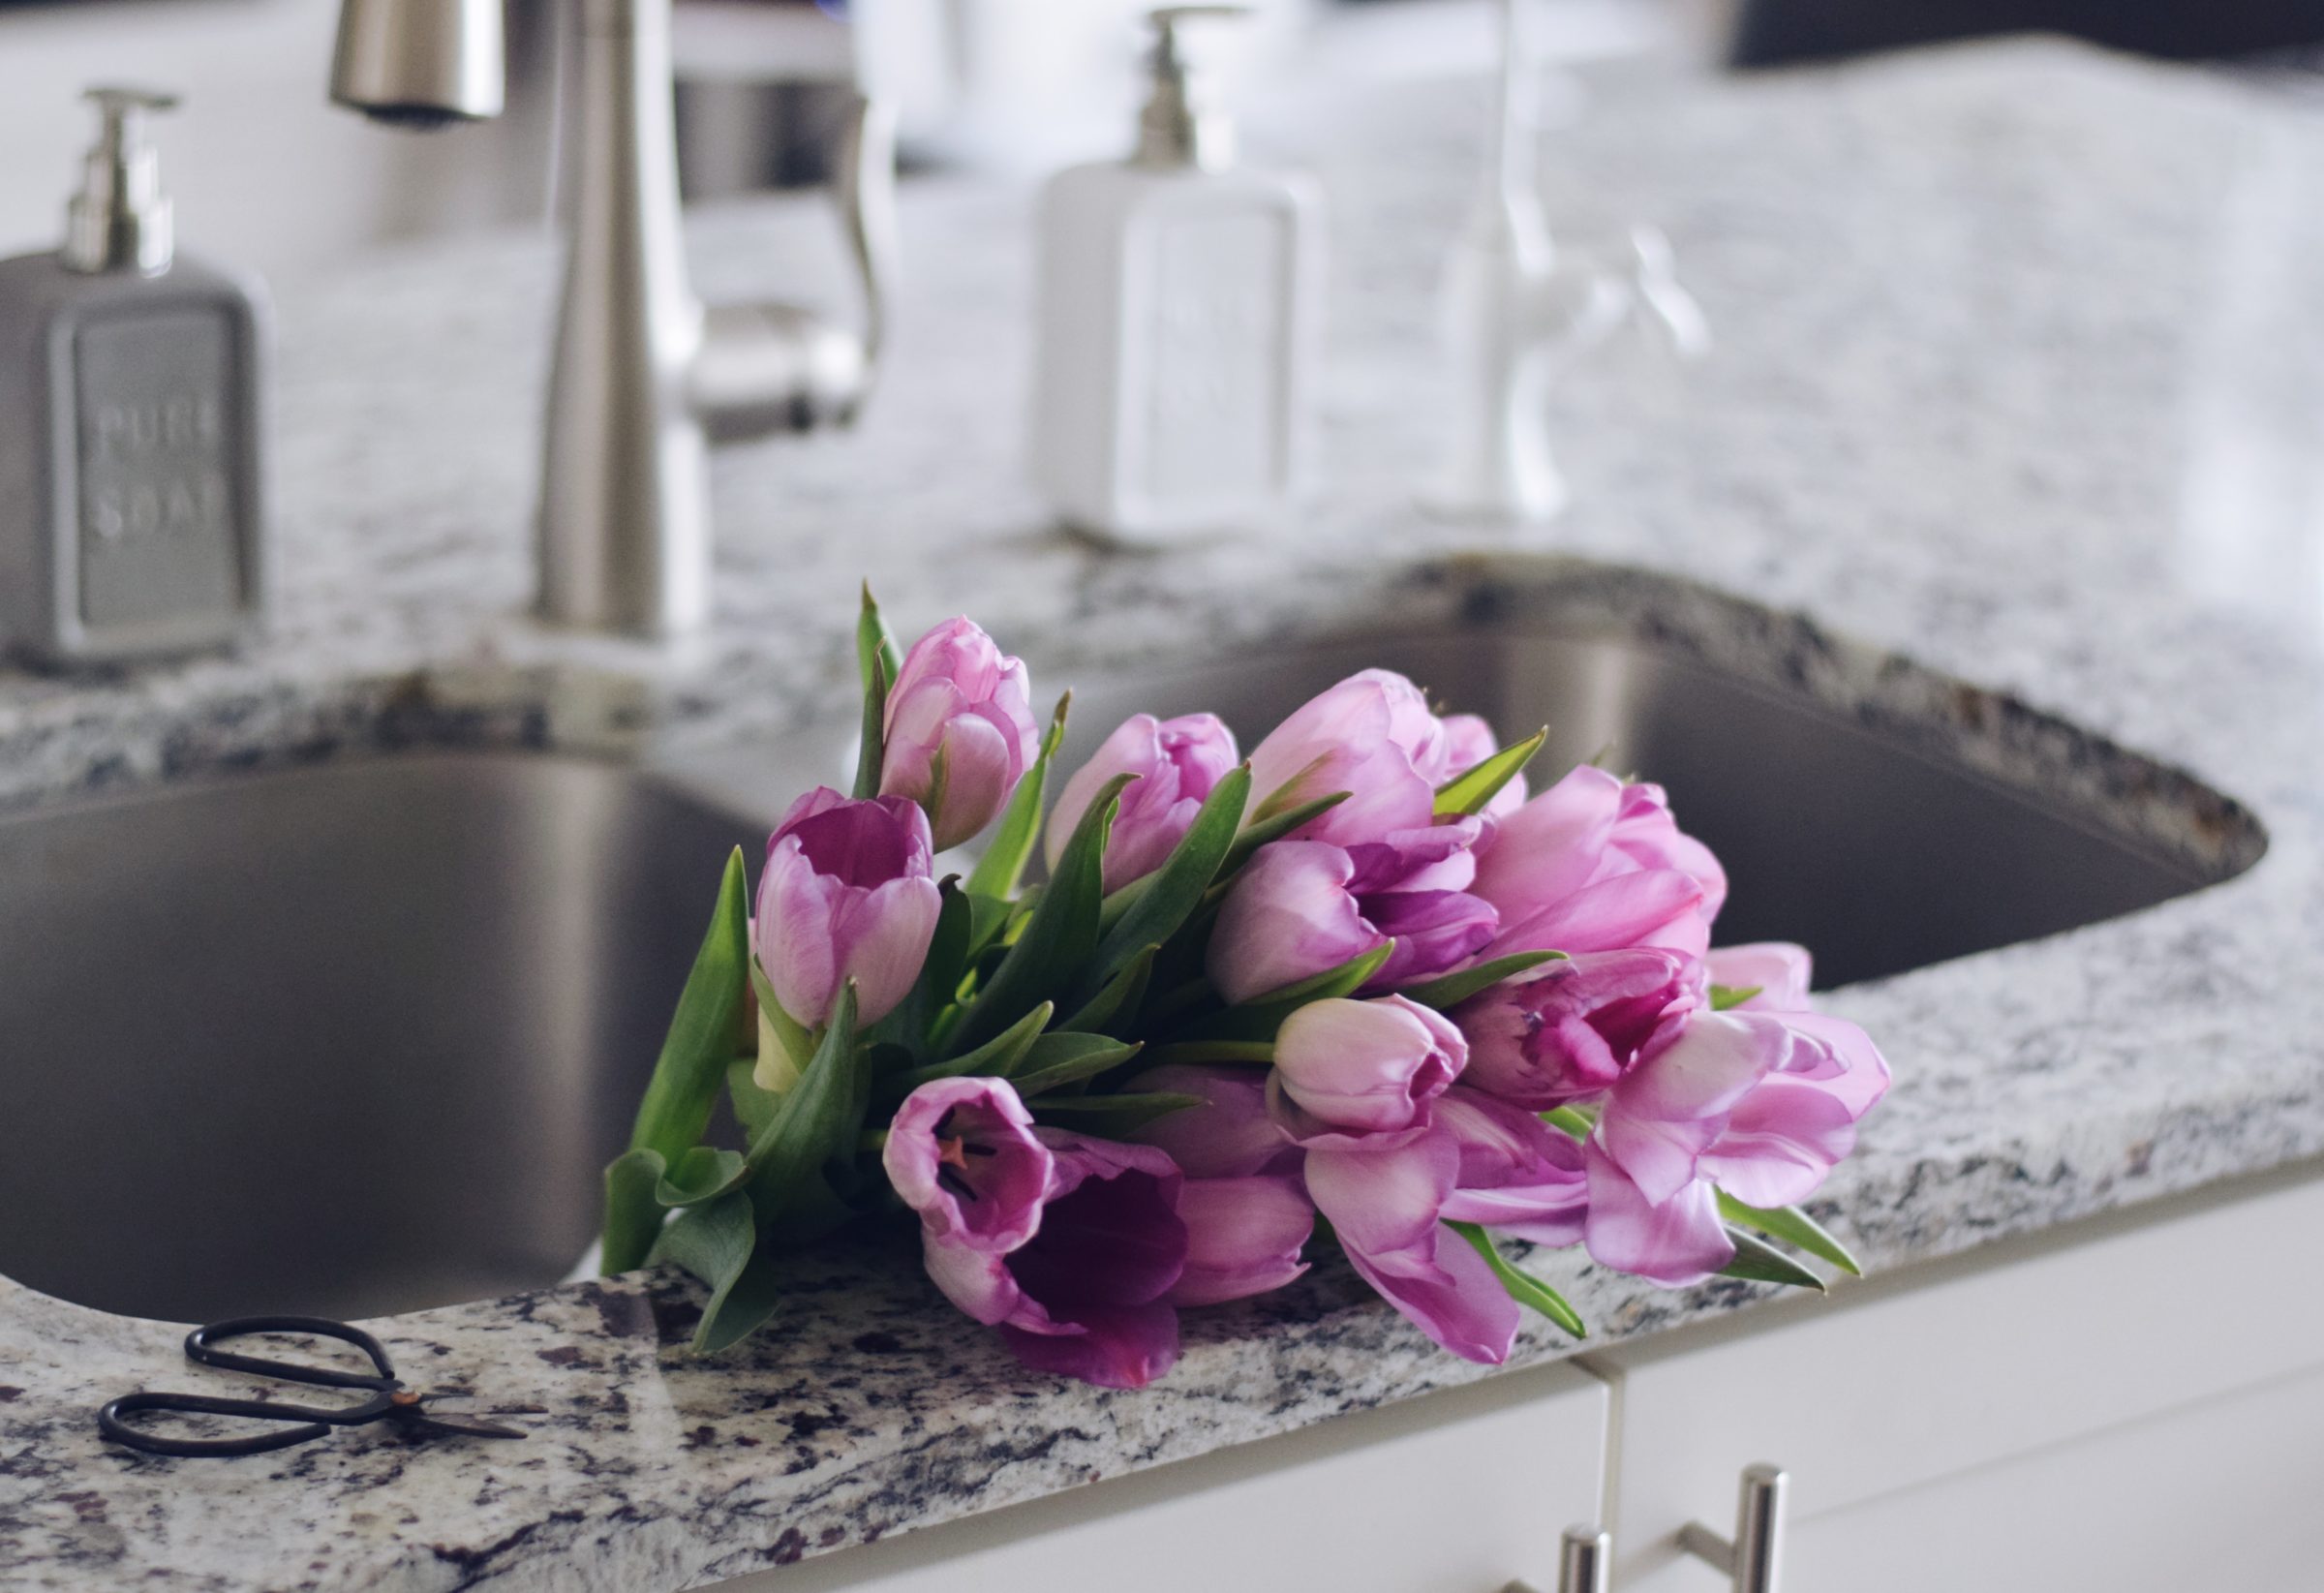 a bouquet of pink tulips inside a kitchen sink in 2021 08 30 10 16 45 utc